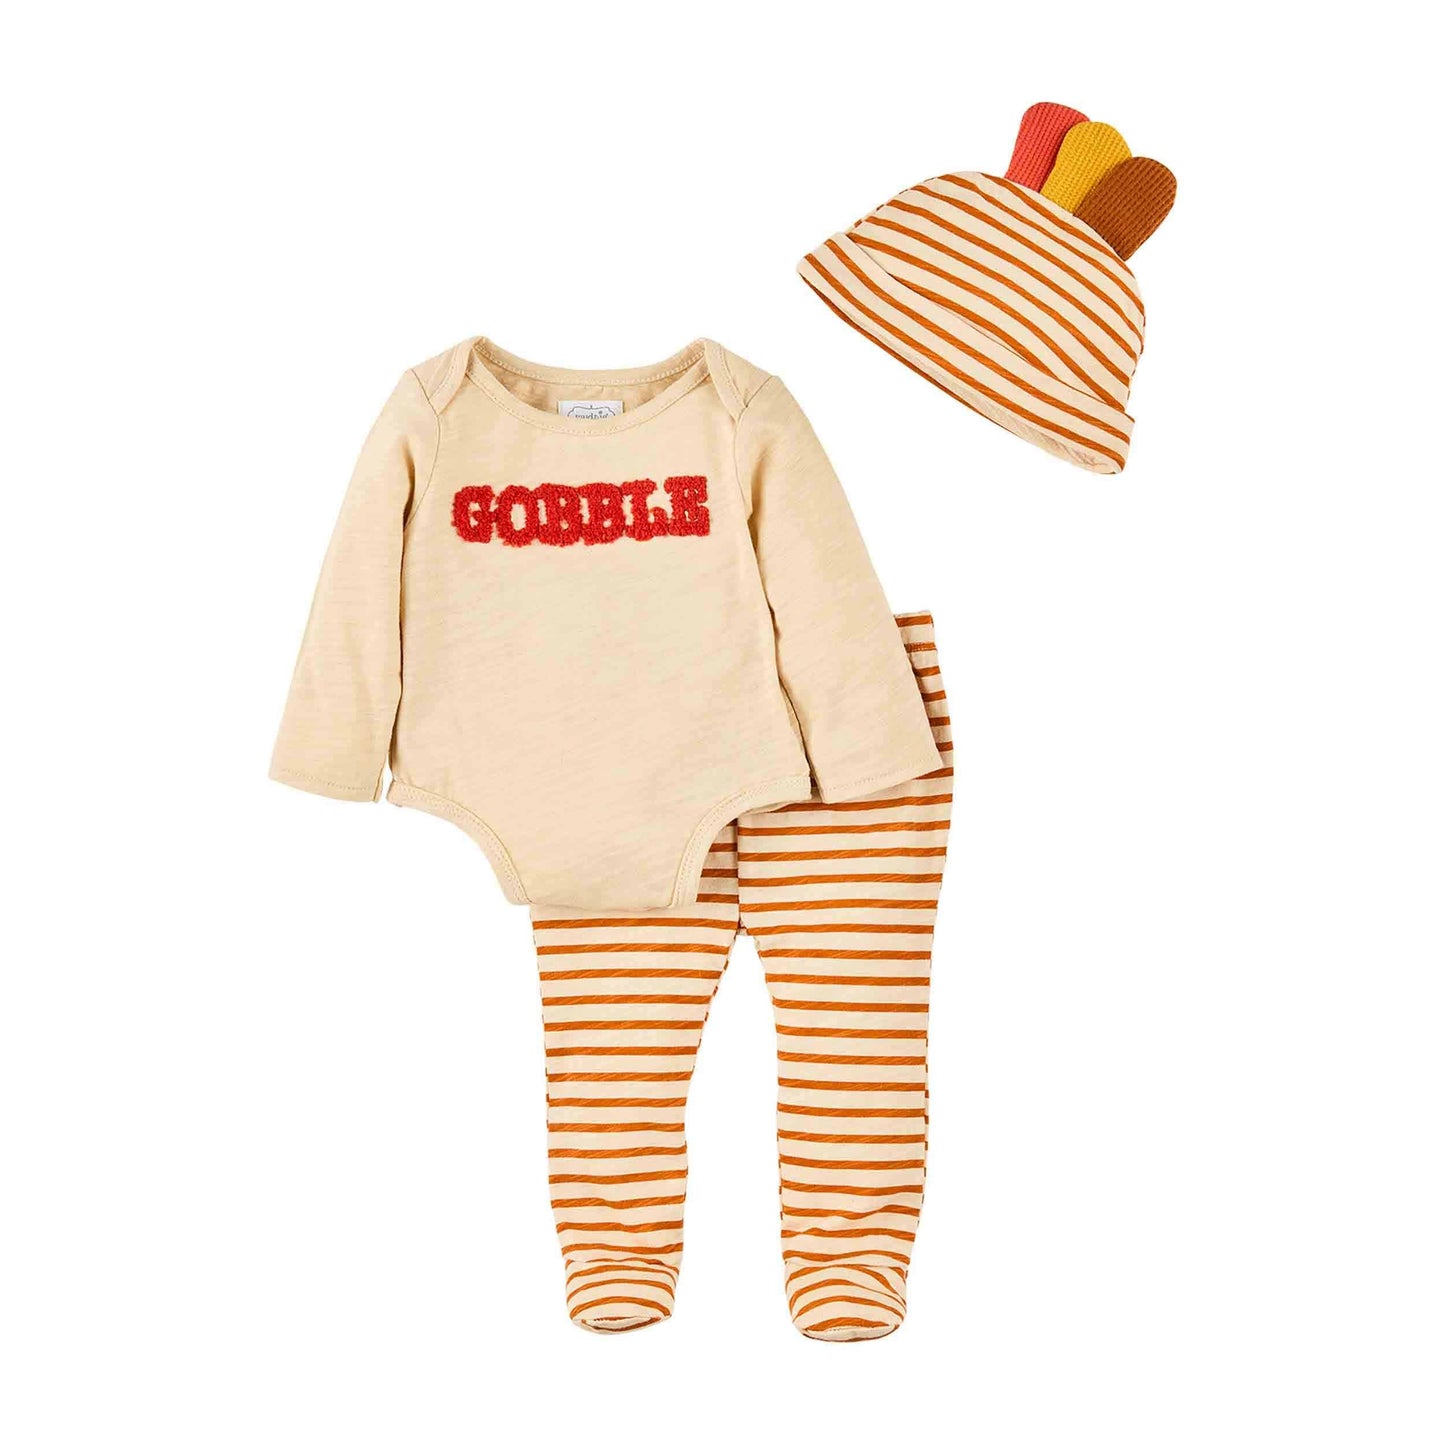 Gobble Baby Bodysuit & Pant Set